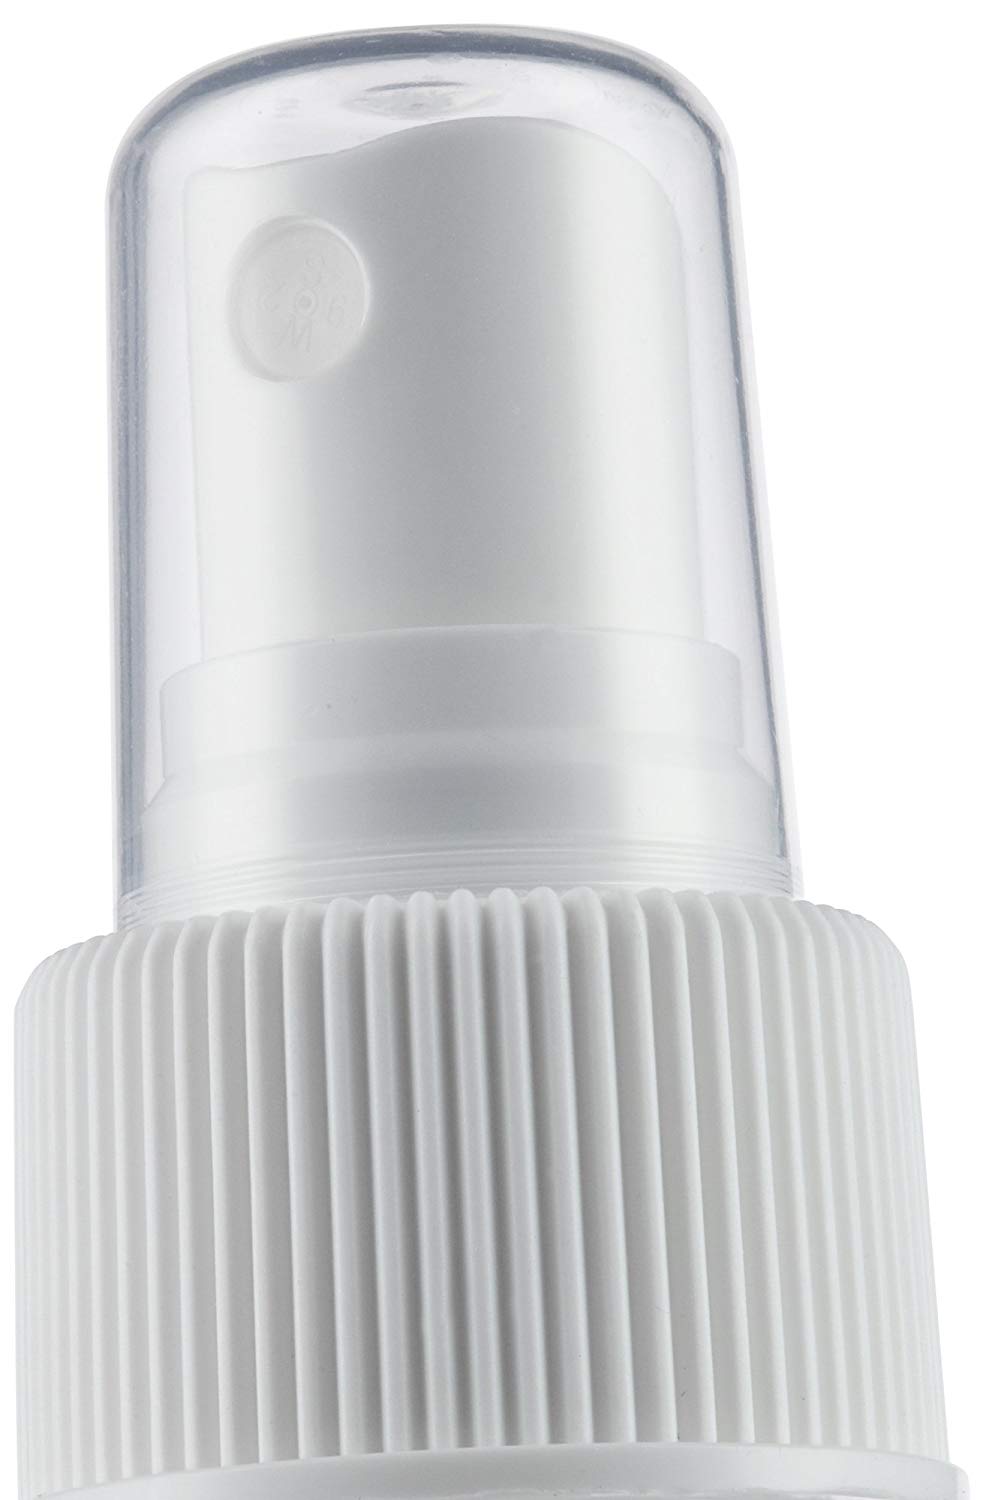 Download Frosted Amber Glass Boston Round Fine Mist Spray Bottle with White Sprayer - 2 oz / 60 ml